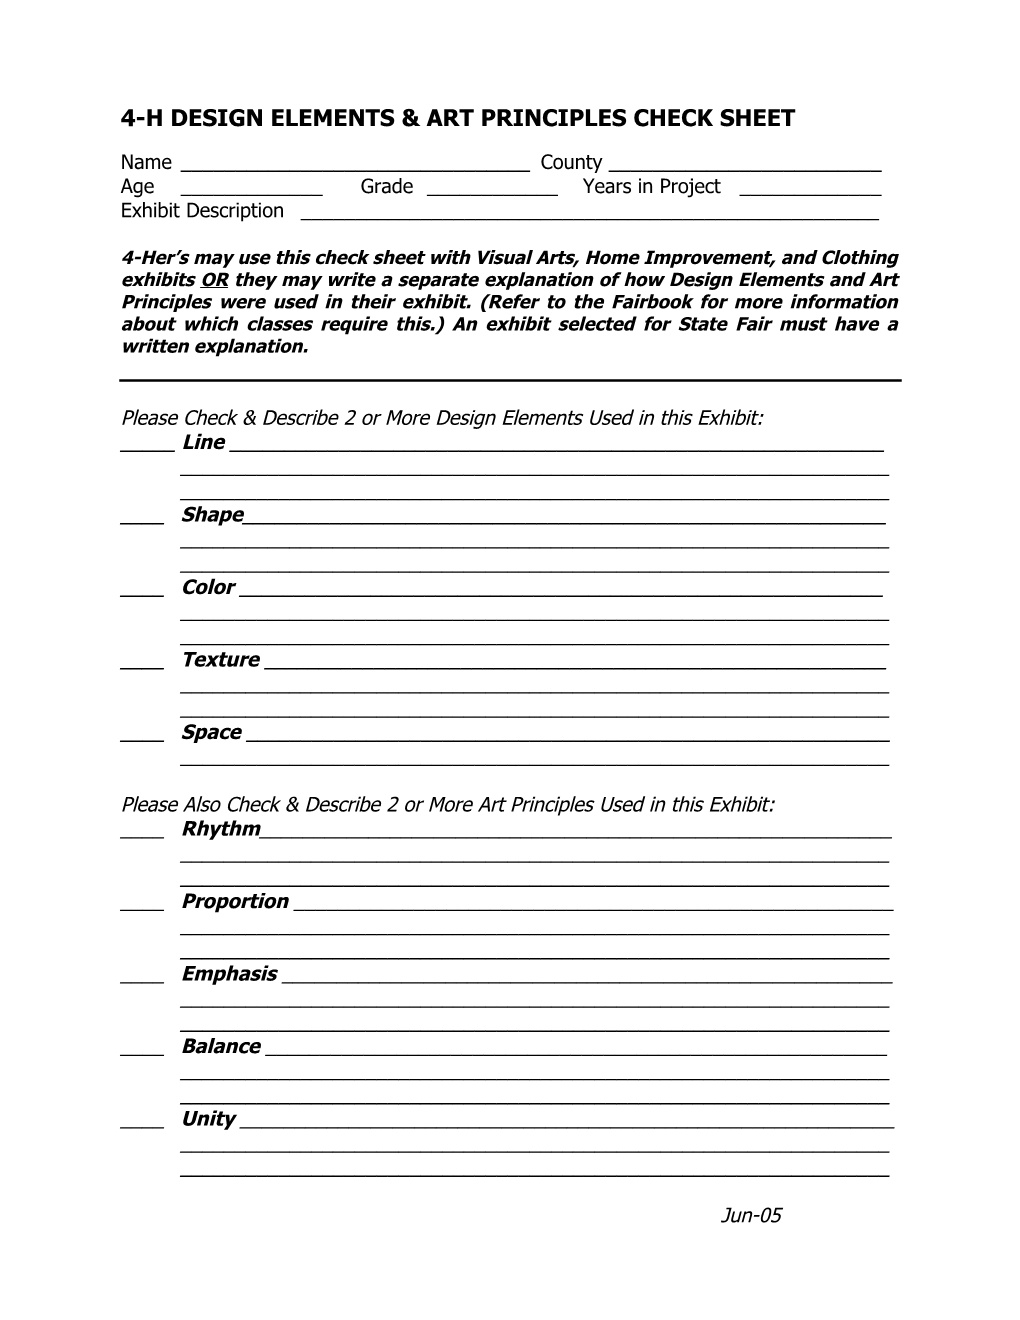 4-H Design Elements & Art Principles Check Sheet